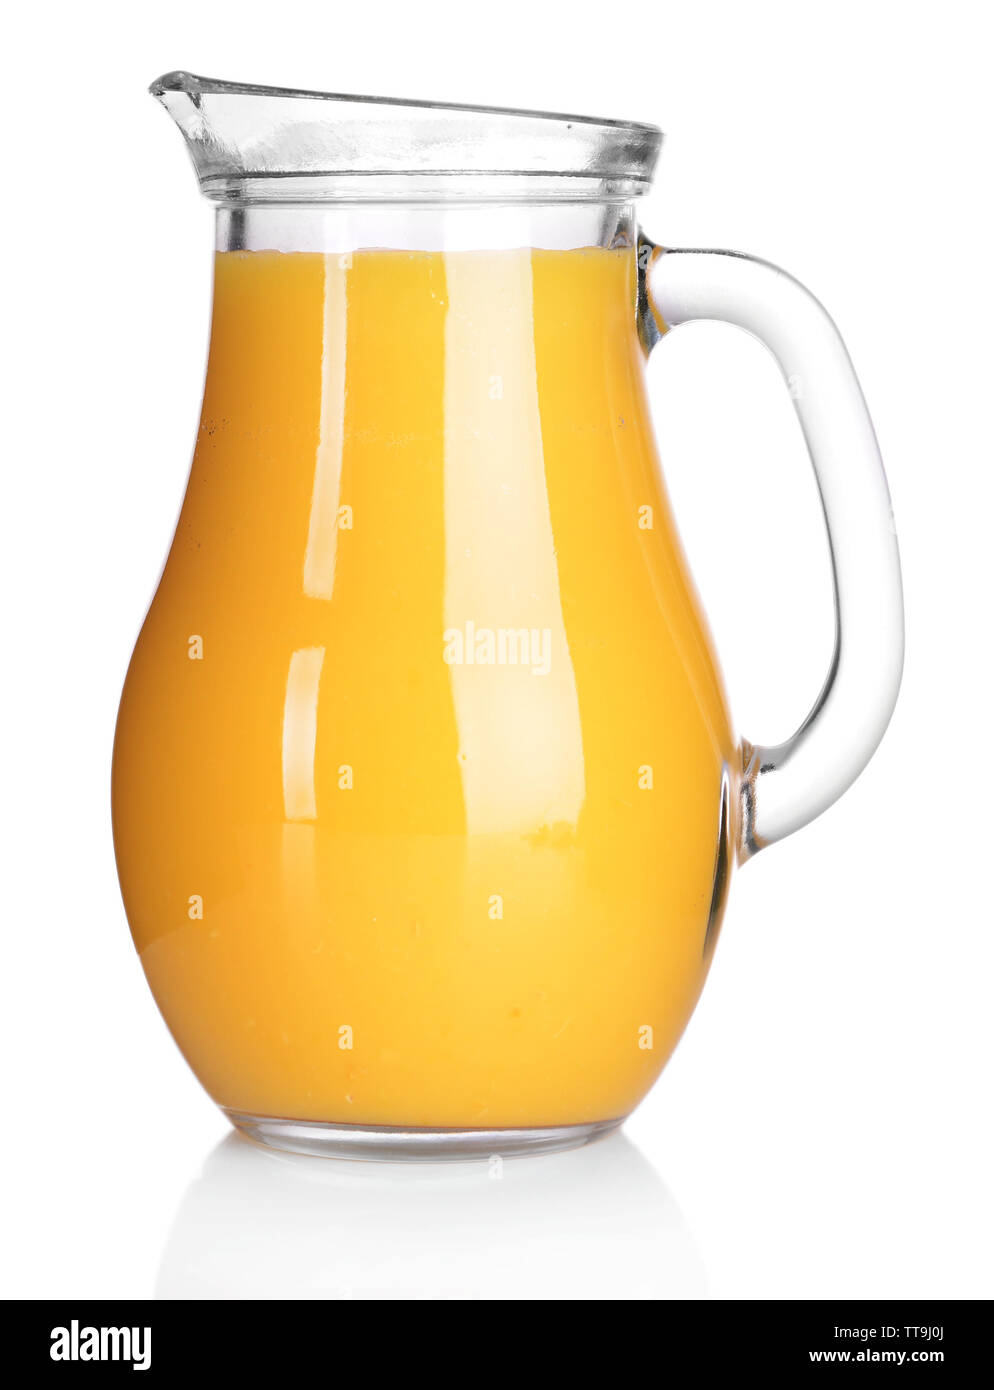 https://c8.alamy.com/comp/TT9J0J/pitcher-of-orange-juice-isolated-on-white-TT9J0J.jpg